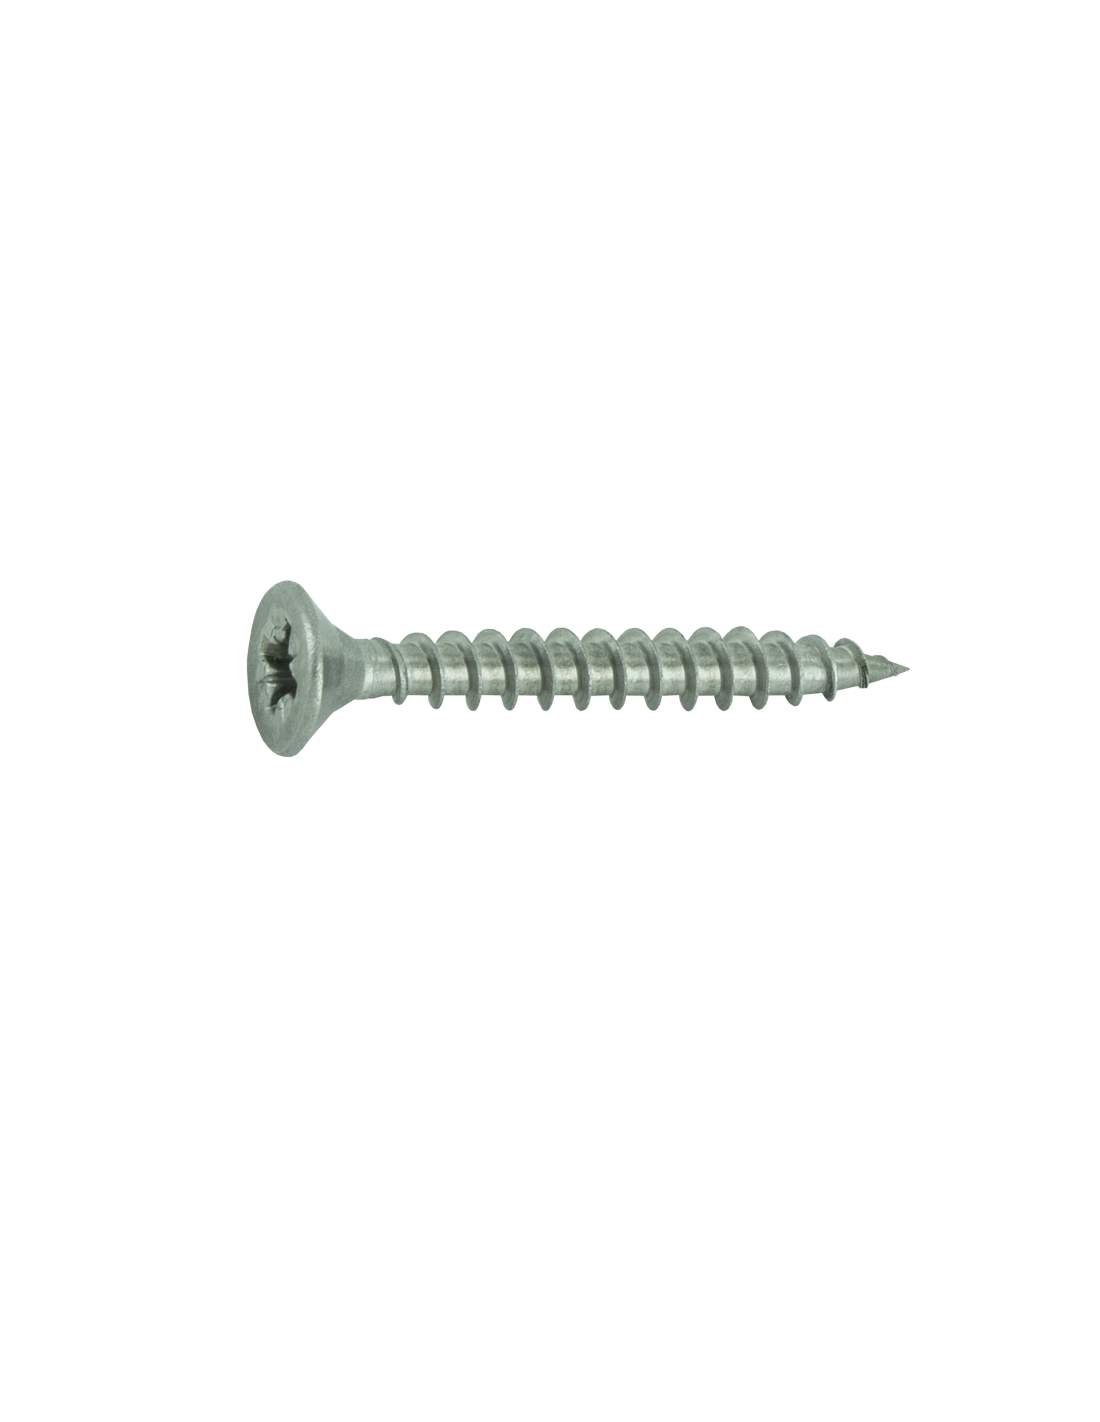 Pozidriv stainless steel countersunk screws A2 3x16, 41 pcs.